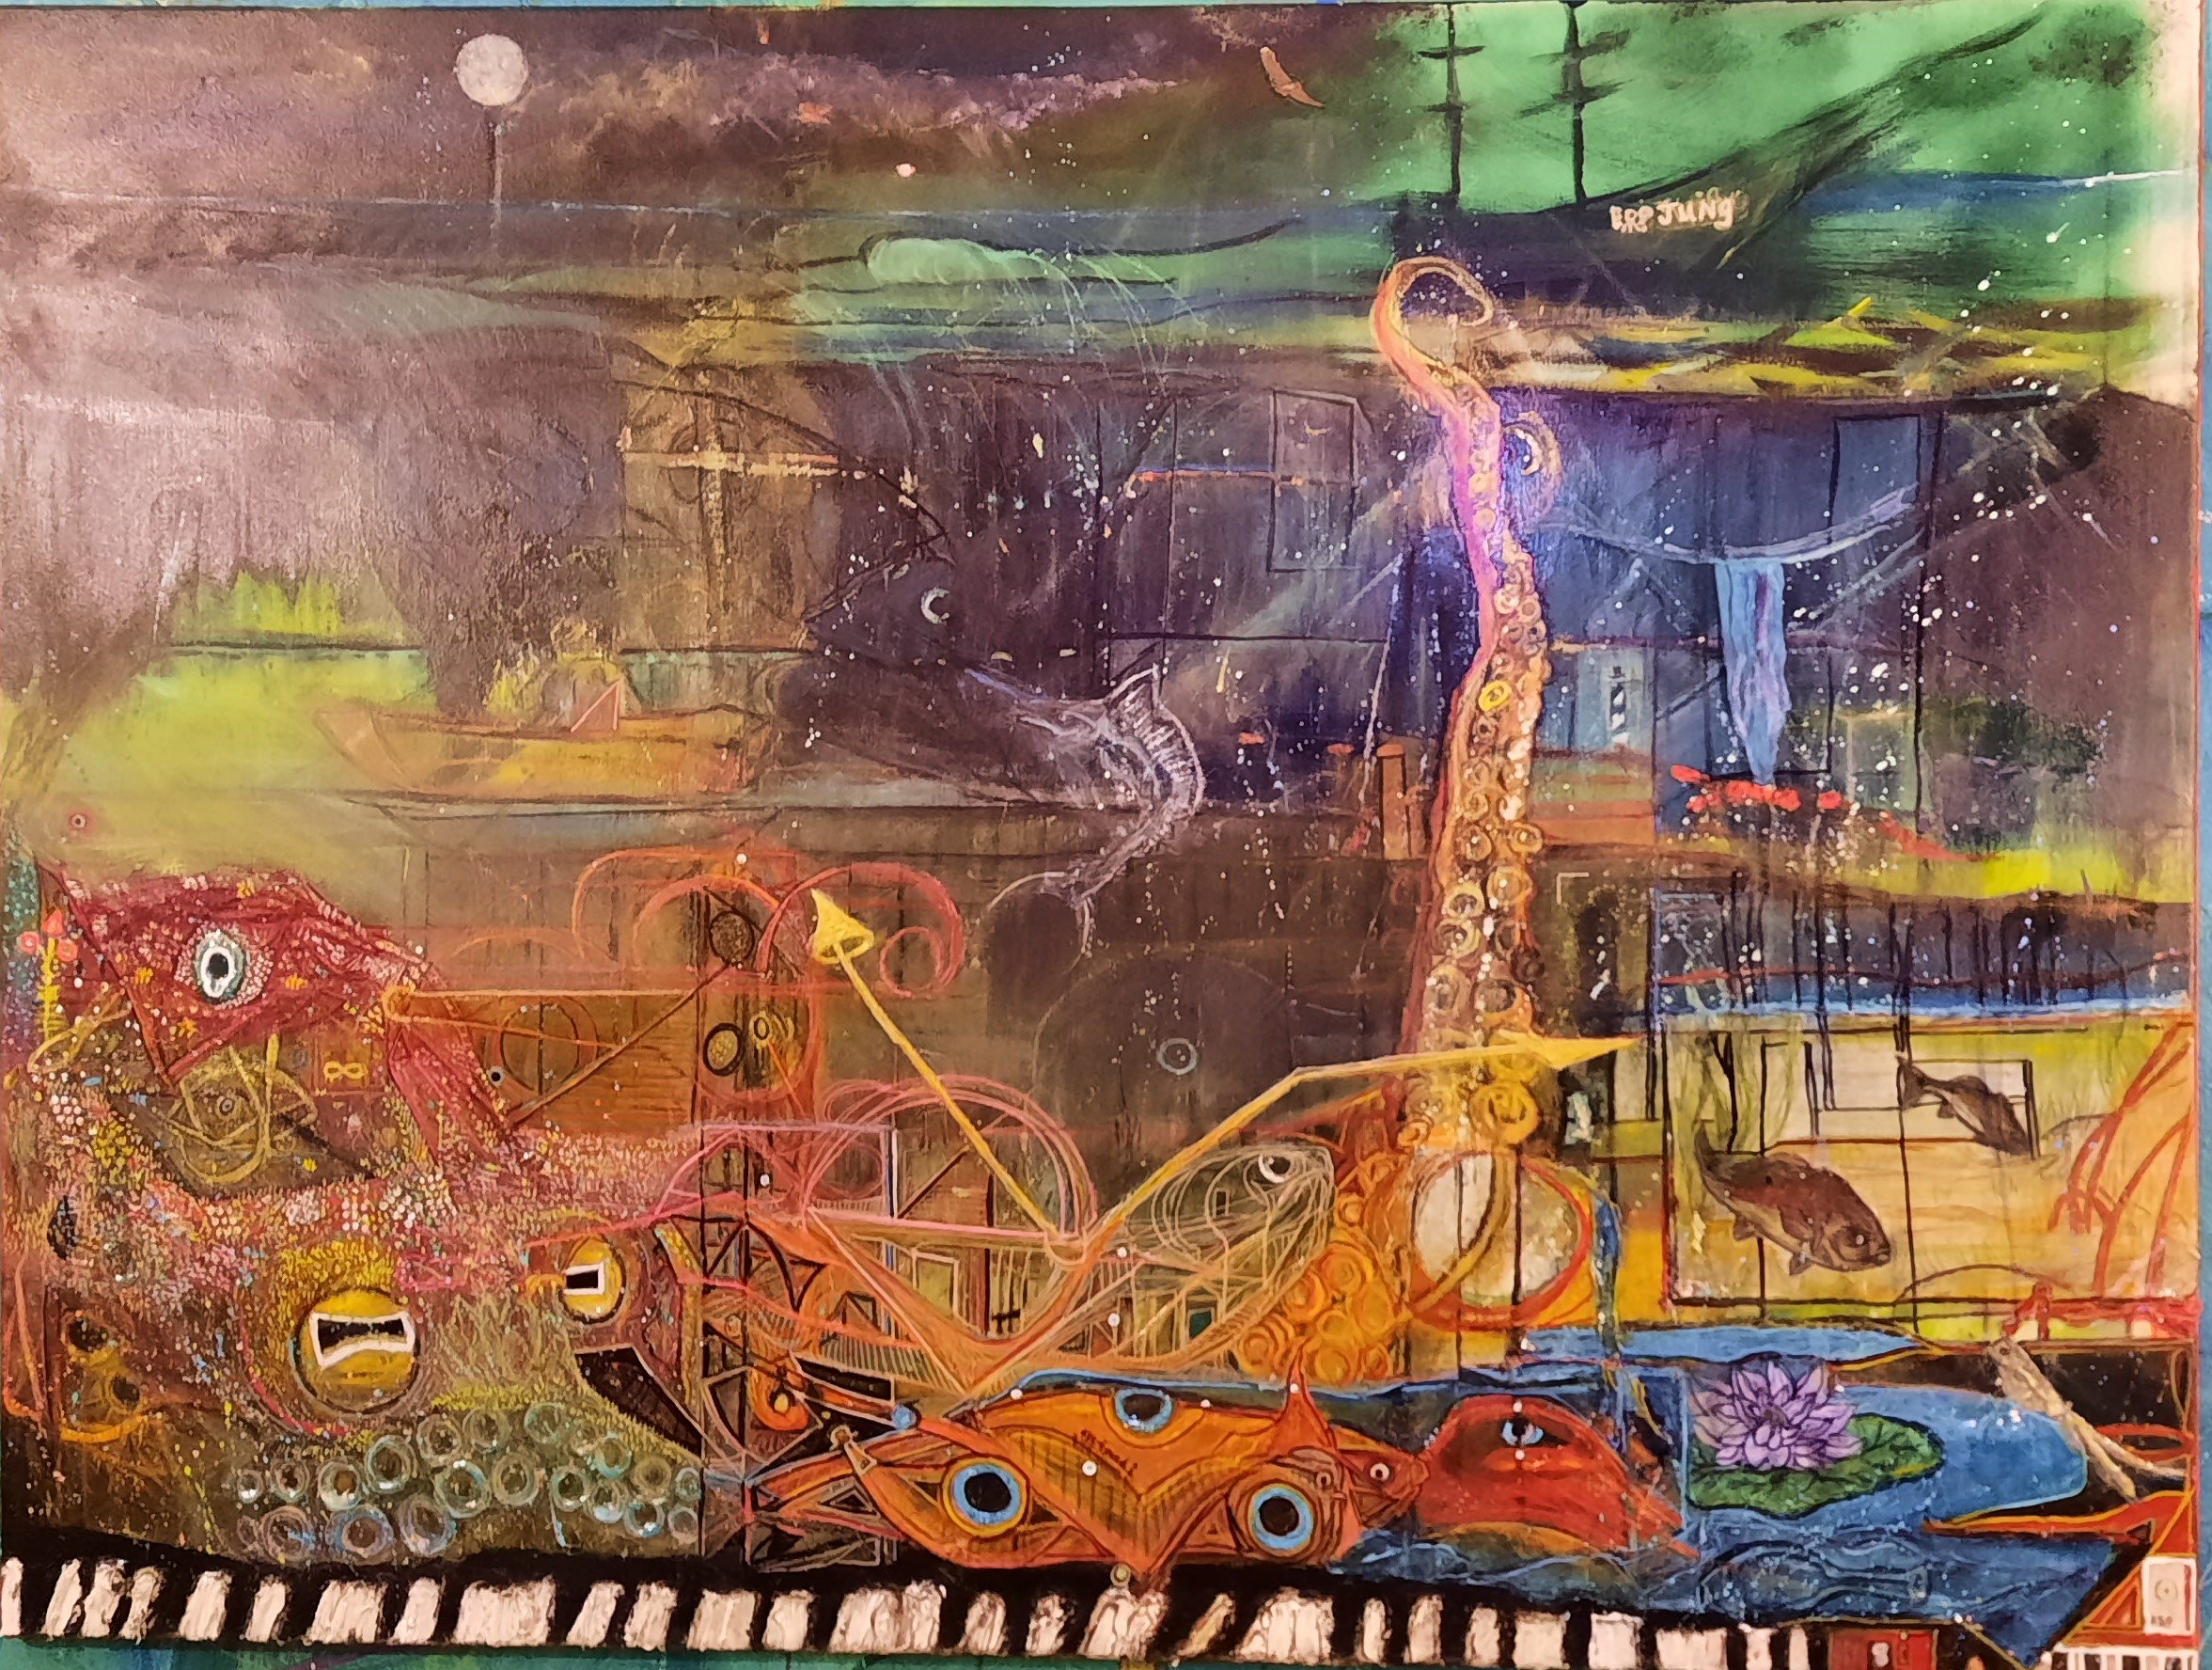 I Am Art- Painted Tote Bag by Linda Woods - Pixels Merch